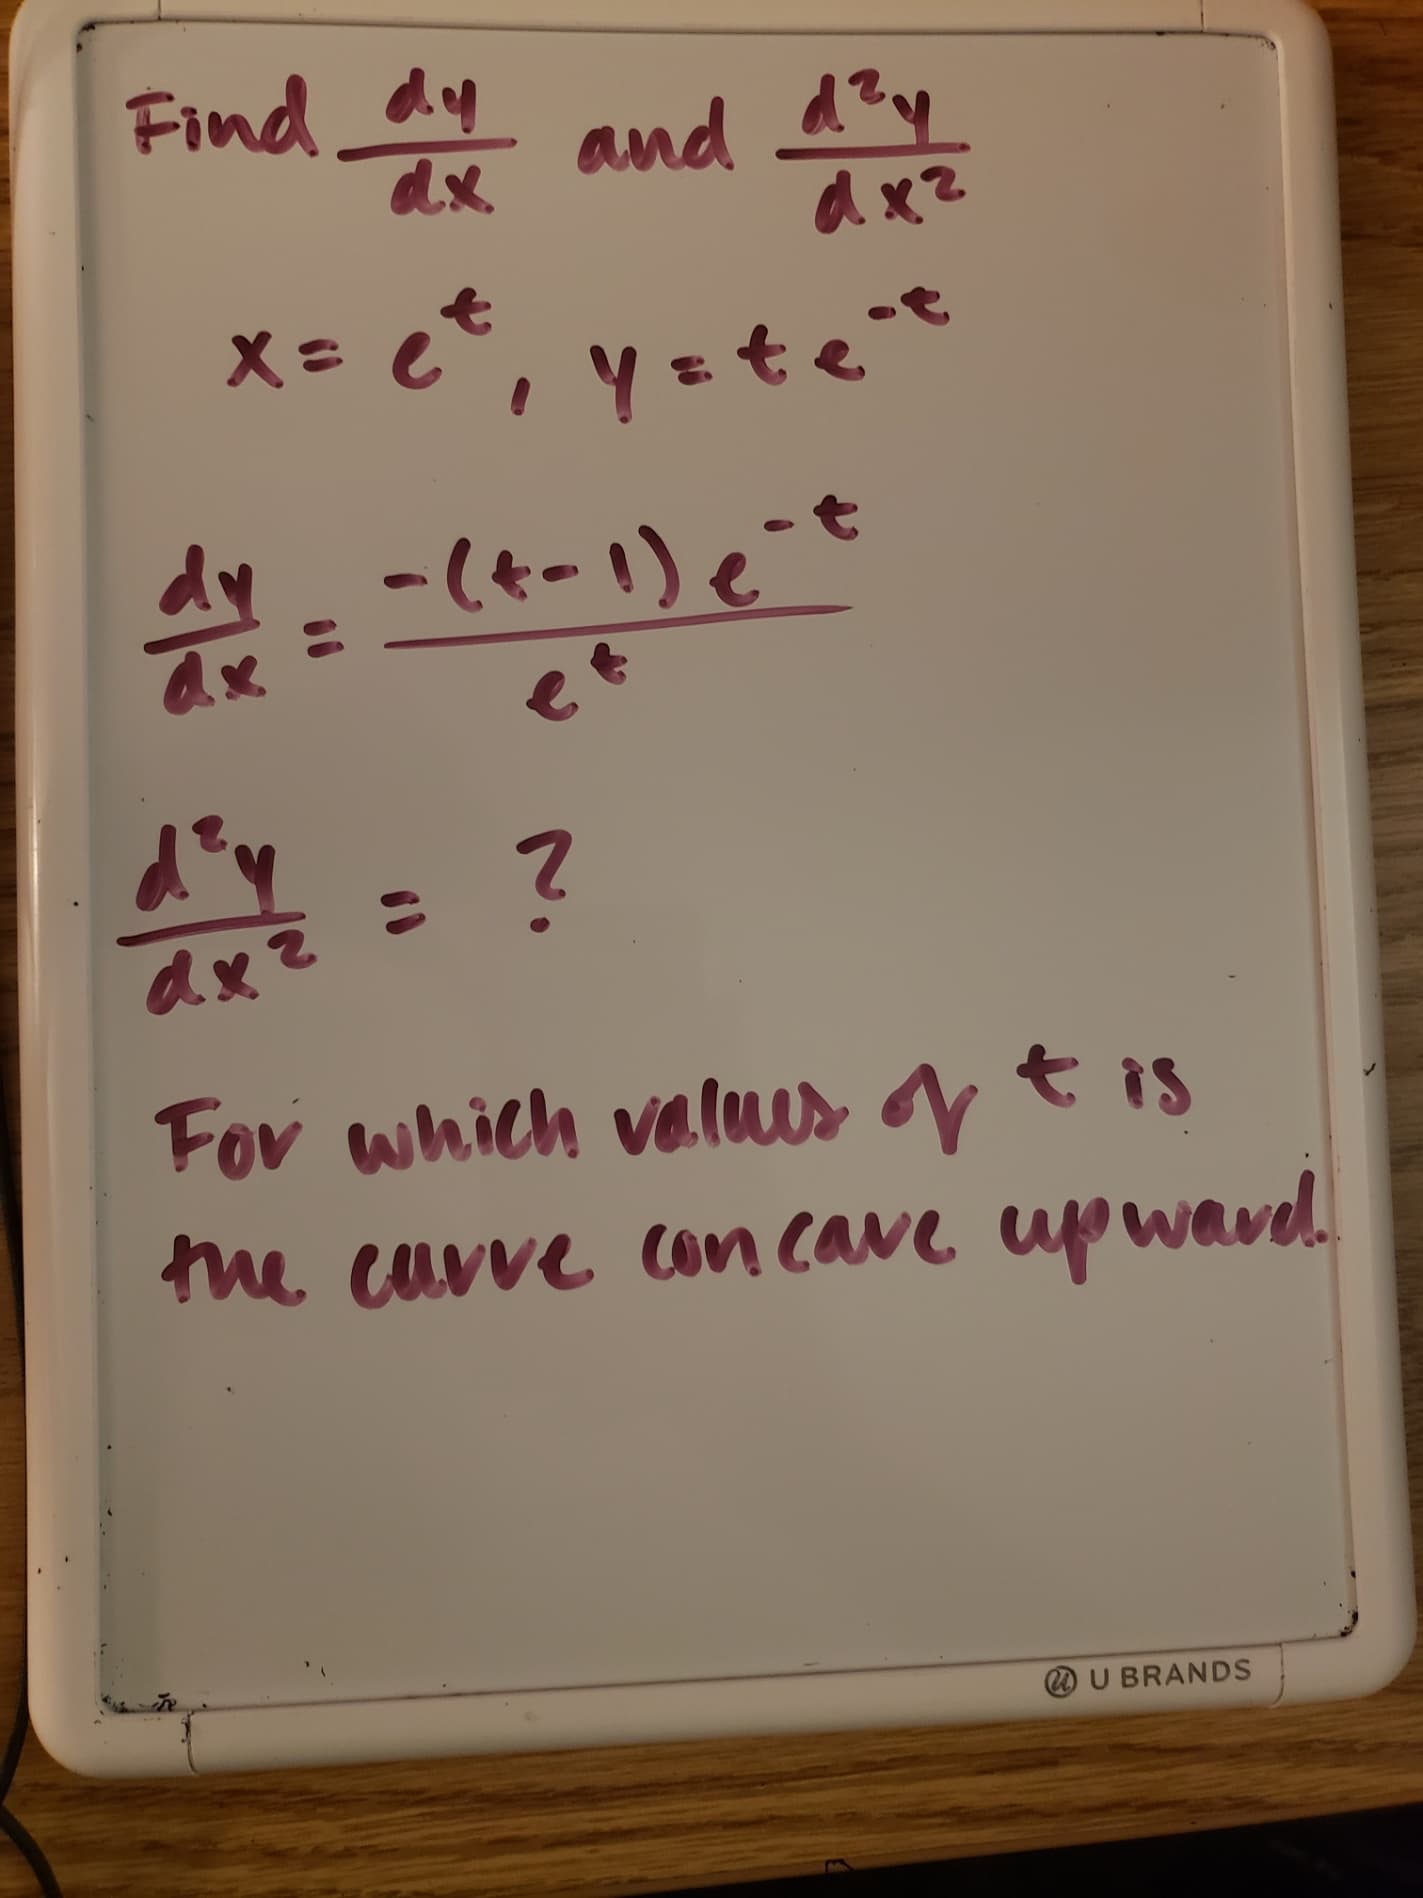 Find 4 and 4y
axz
dx
y=te*
dy- -(t-1)et
y t is
Fov which values
the curve con cave upwavd.
U BRANDS
